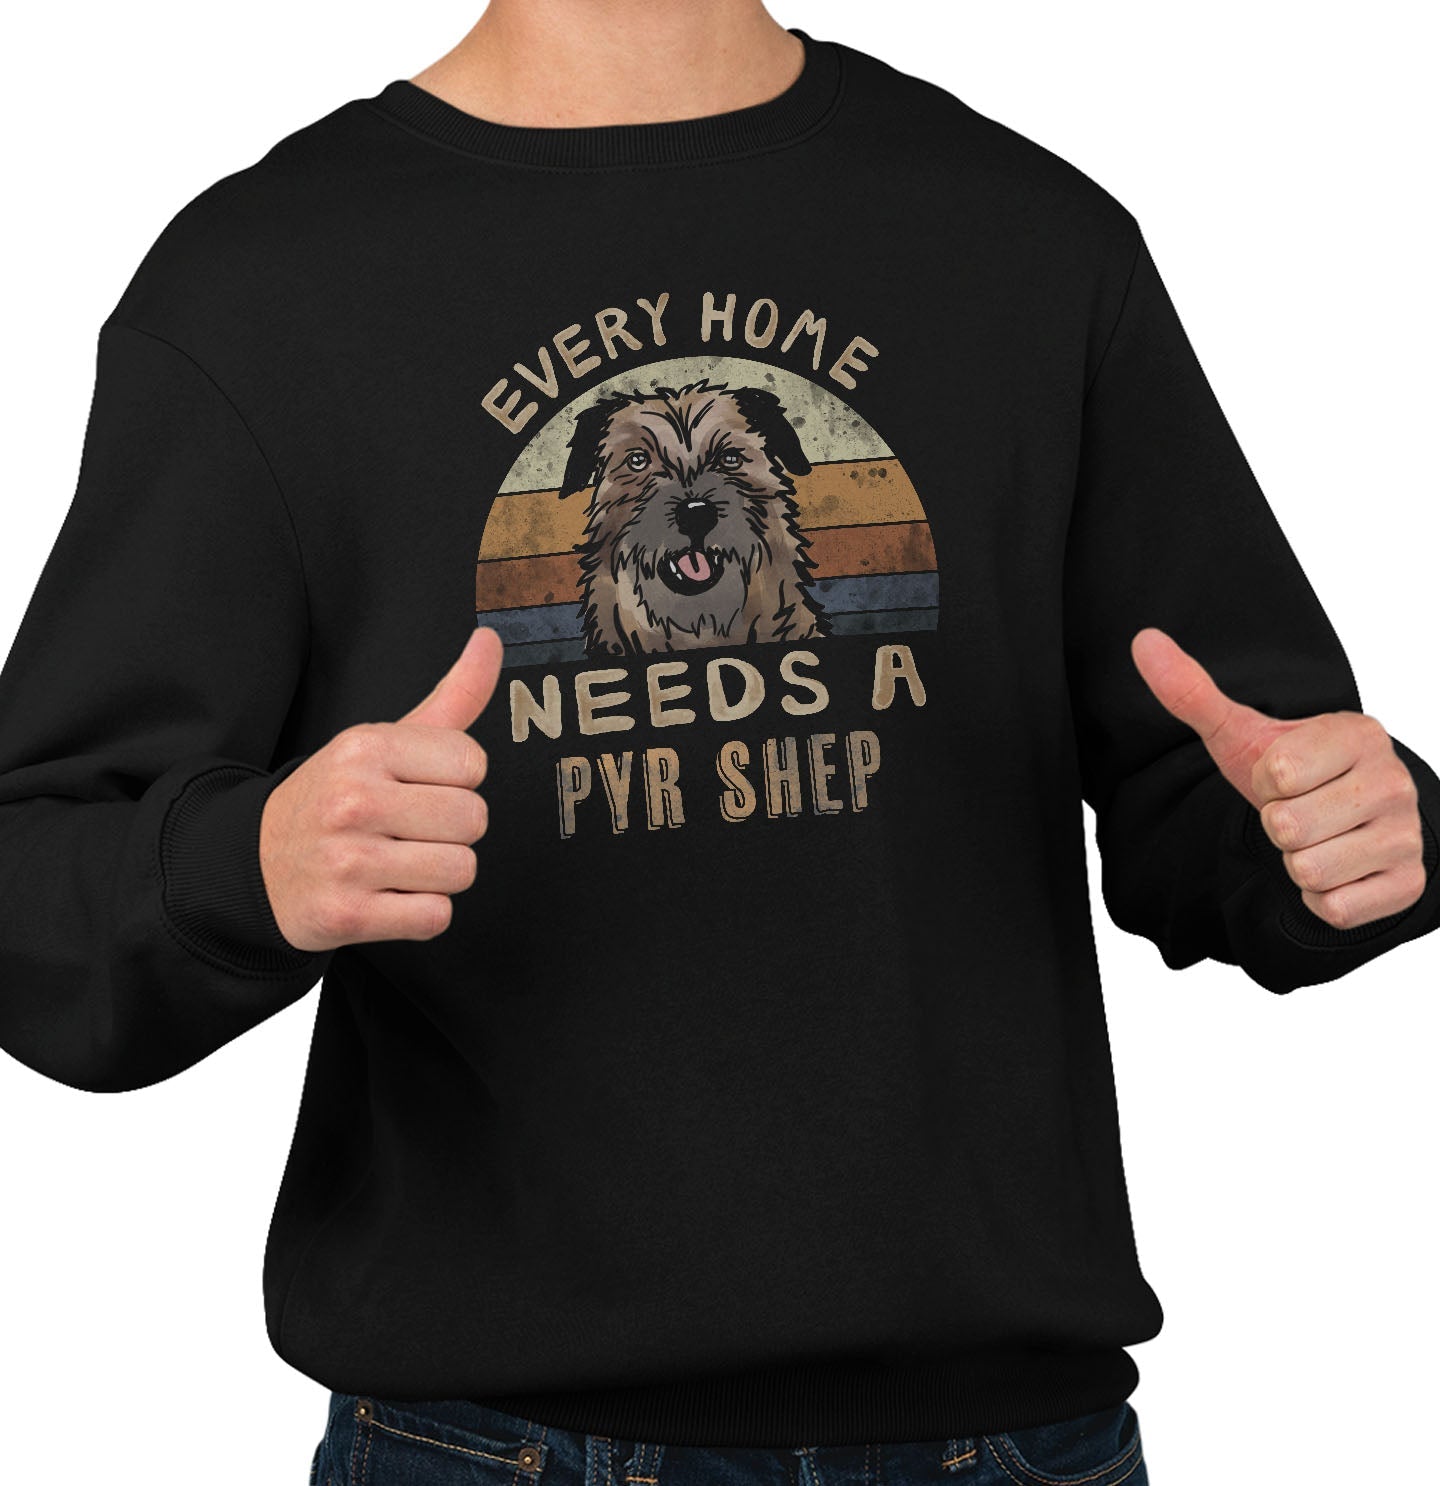 Every Home Needs a Pyrenean Shepherd - Adult Unisex Crewneck Sweatshirt